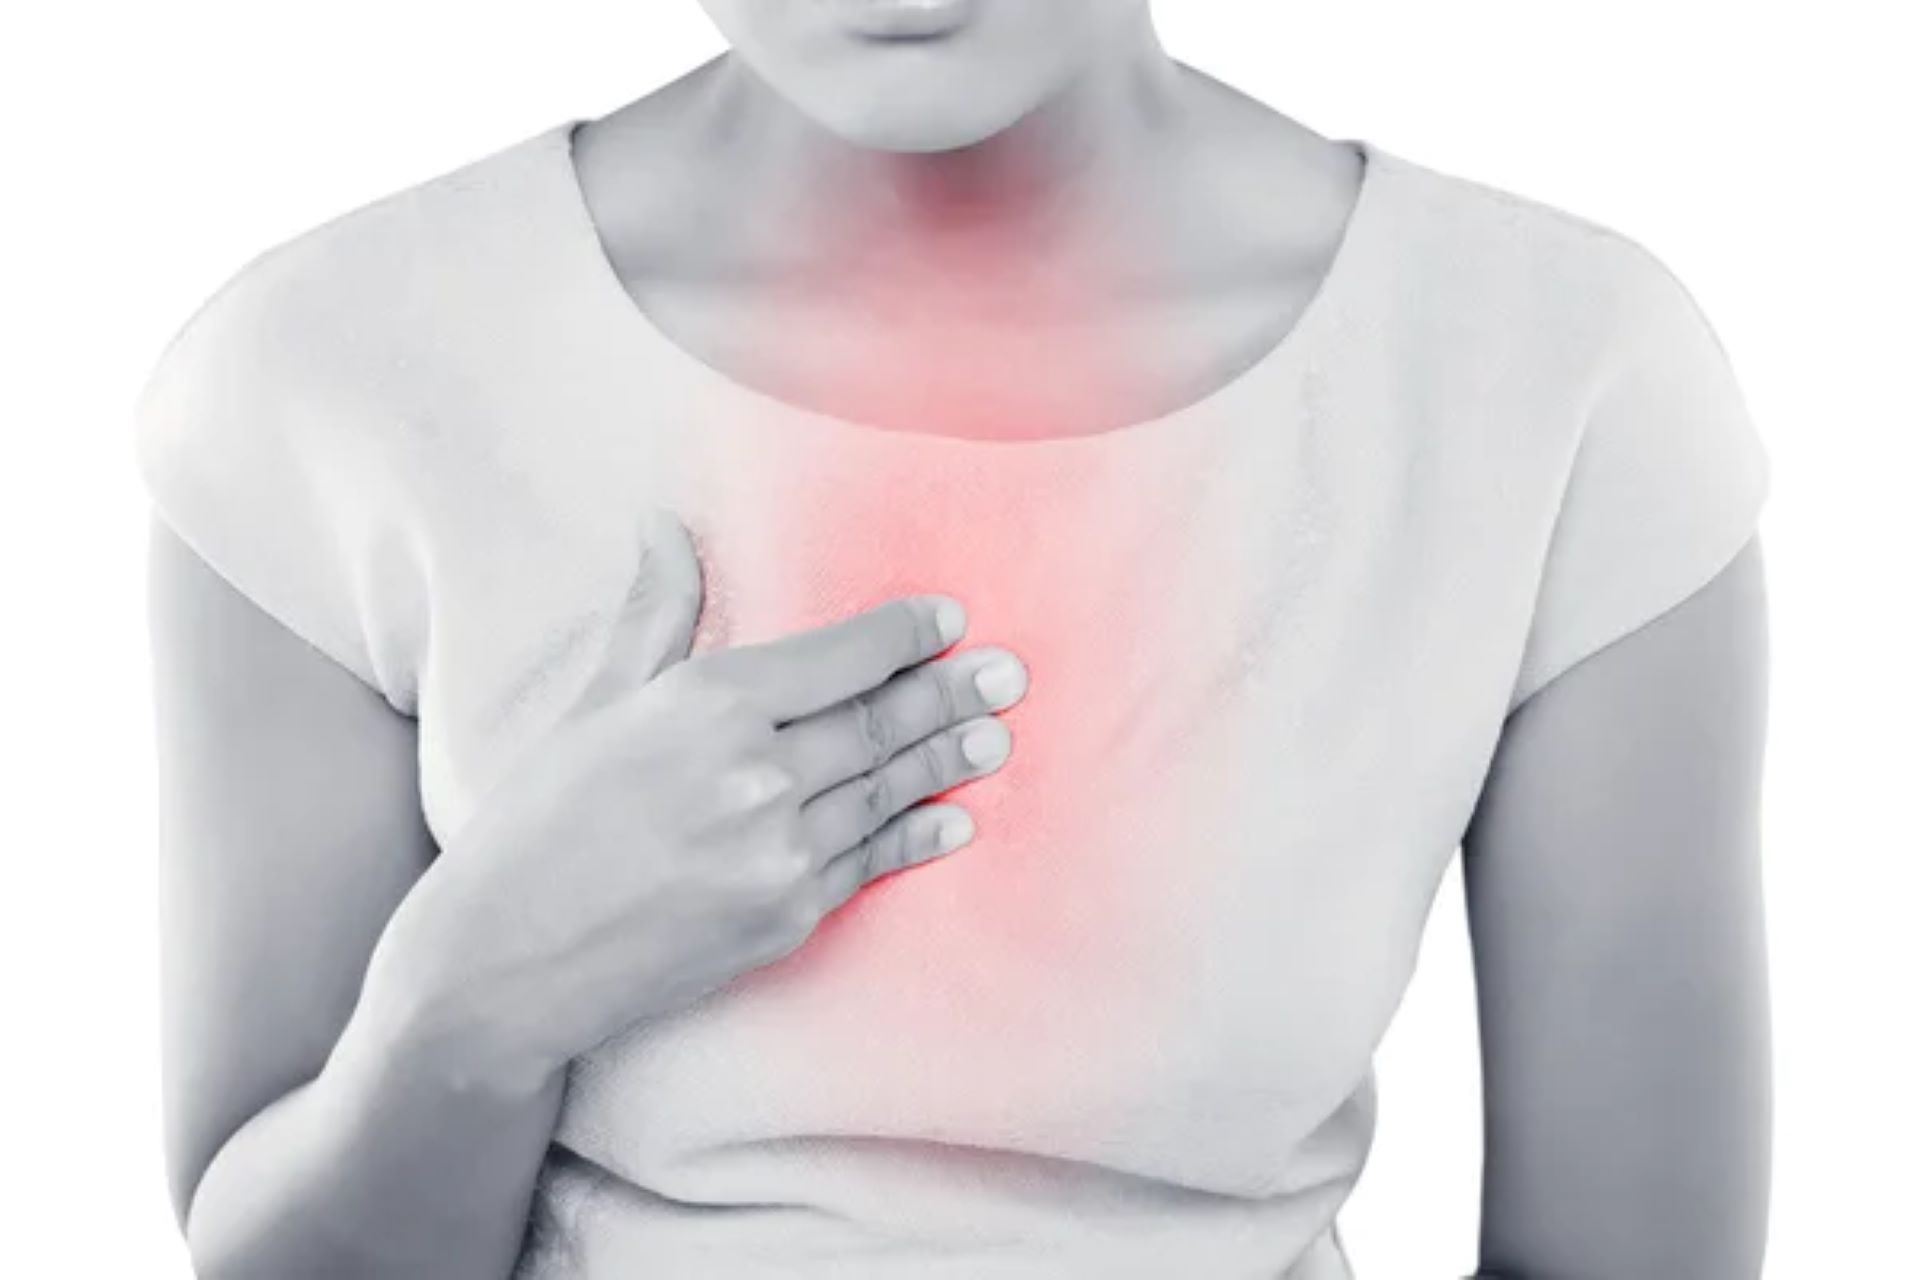 Can Heartburn Cause Back Pain? - Neuragenex